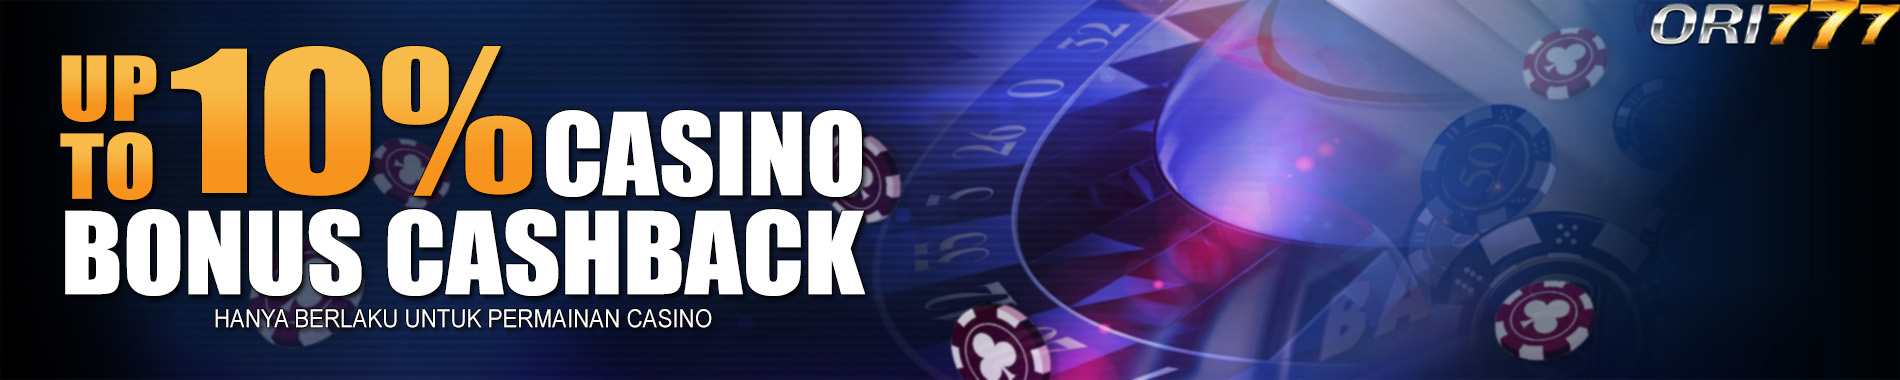 bonus cashback casino 10%